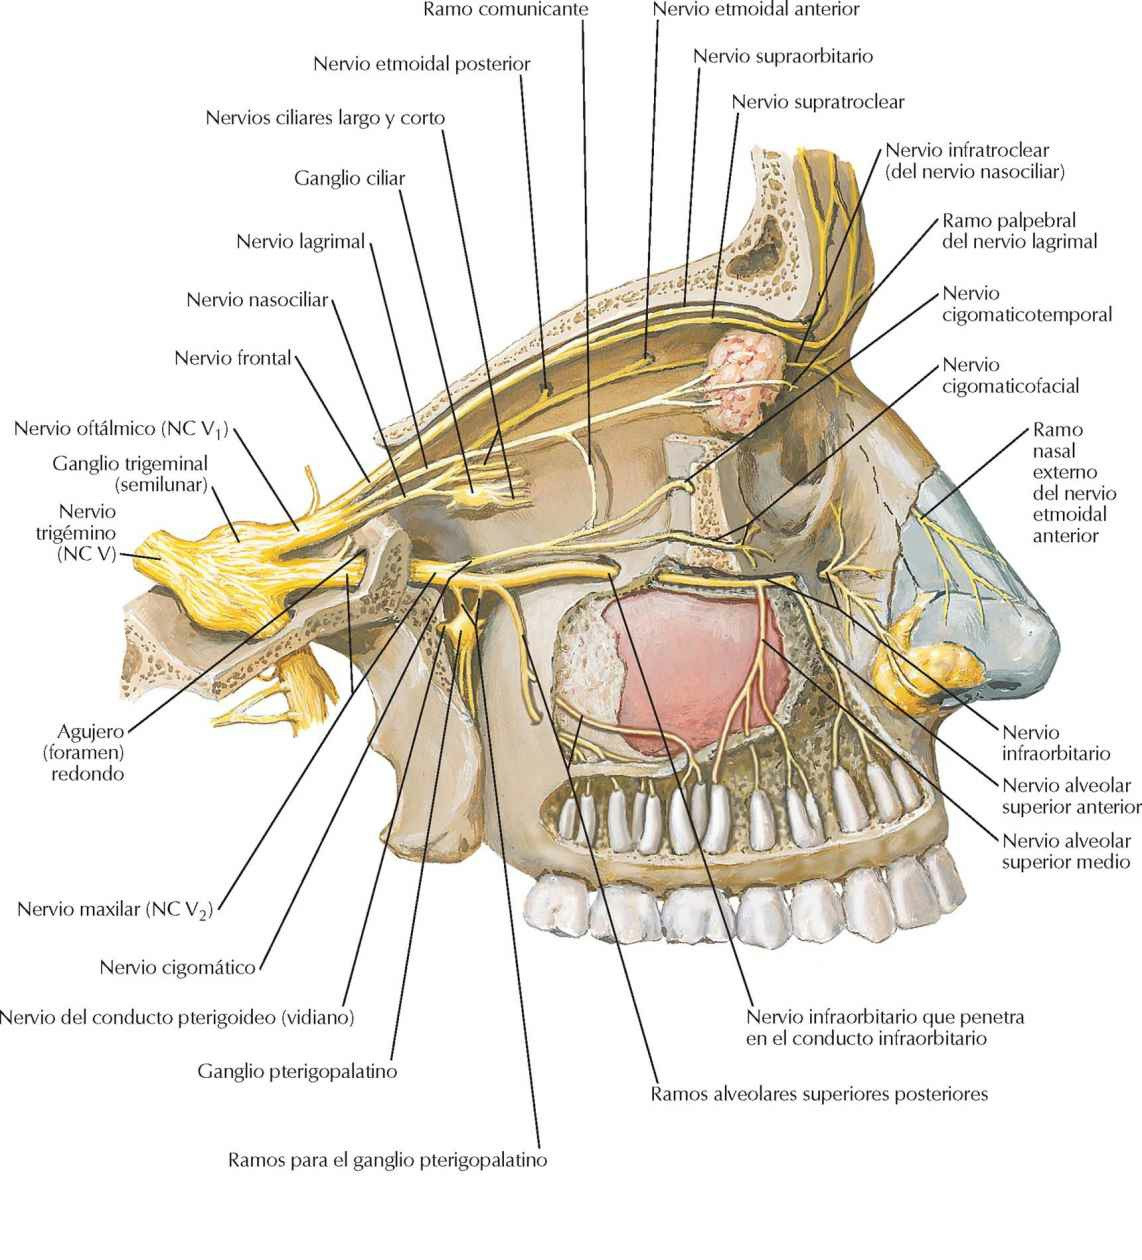 Nervios oftálmico (NC V 1) y maxilar (NC V 2).